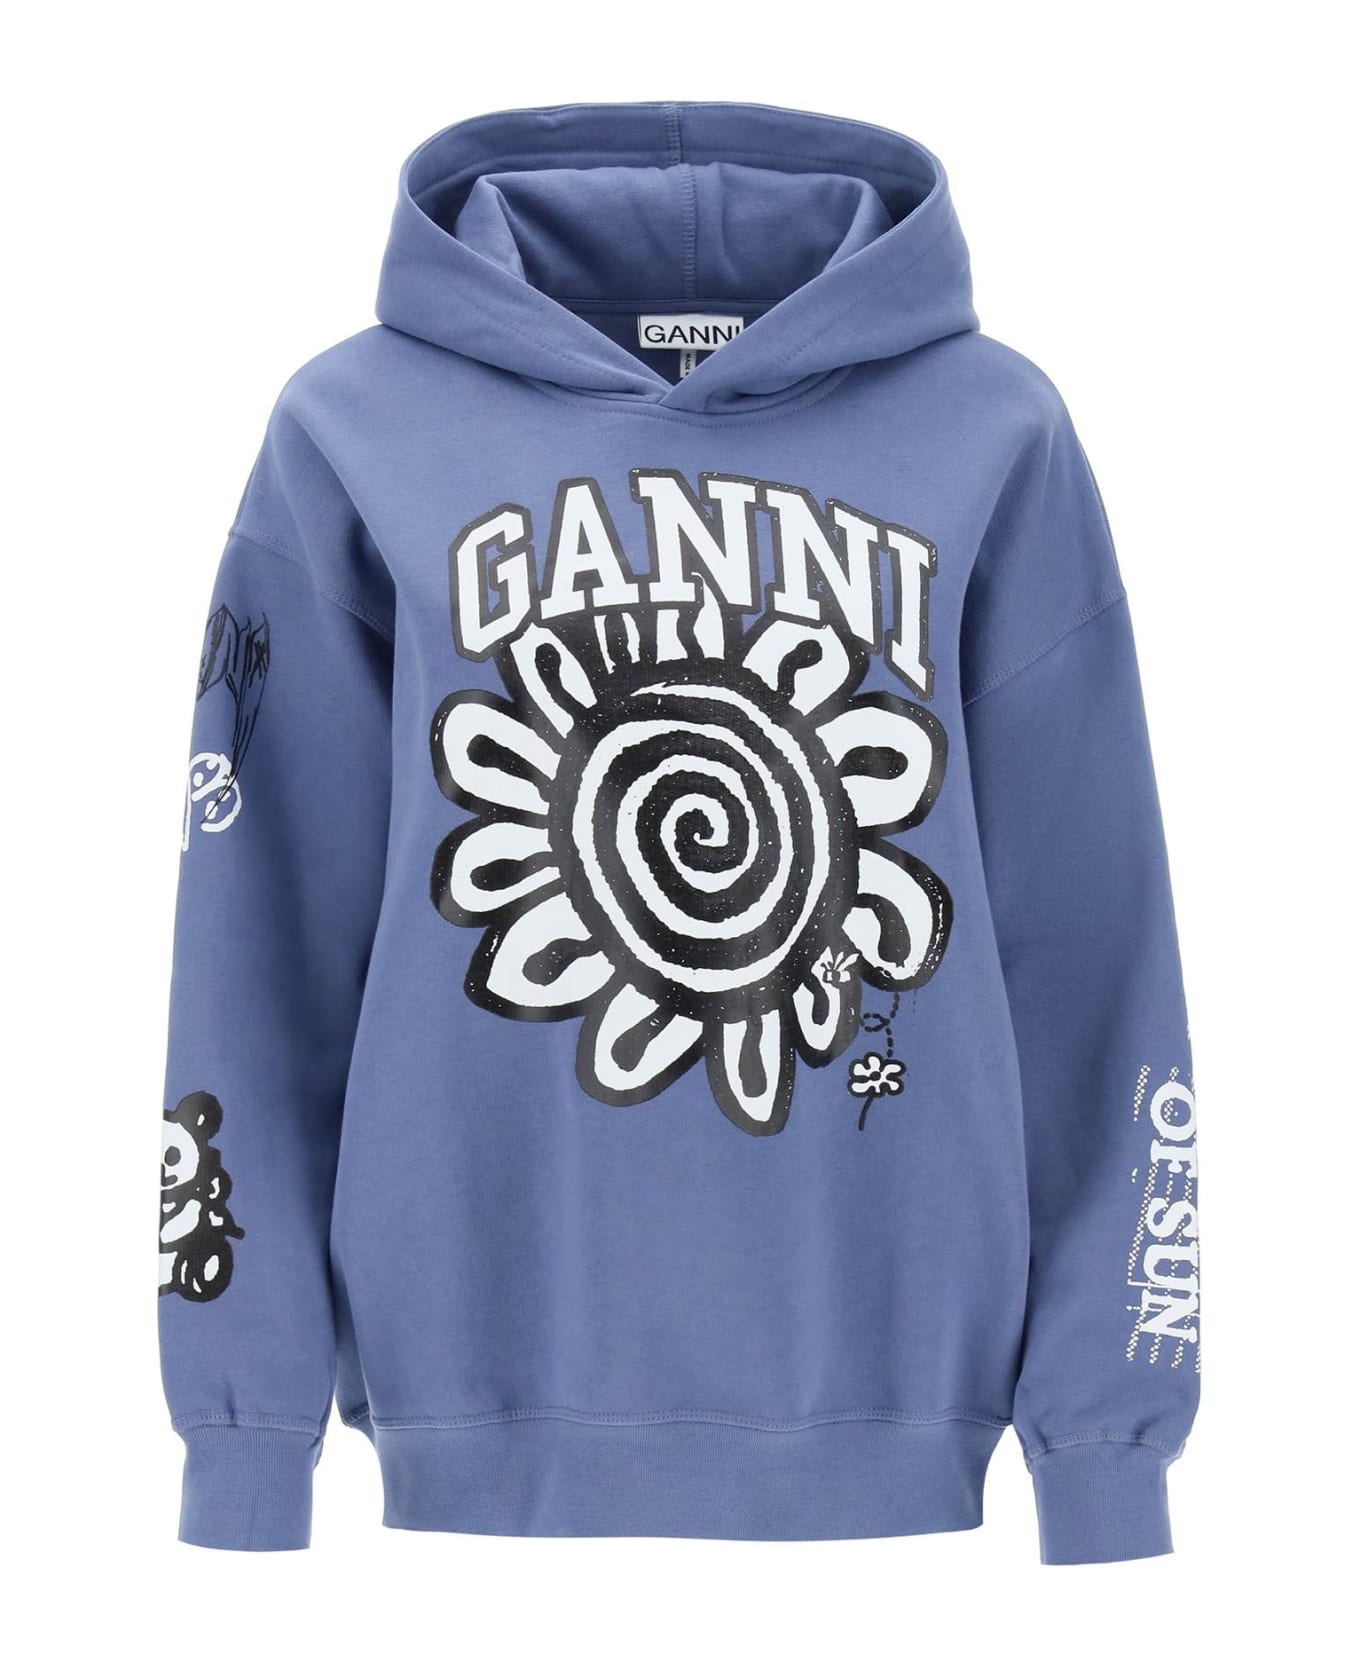 Ganni 'isoli Flower' Blue Cotton Sweatshirt - GRAY BLUE (Light blue) フリース